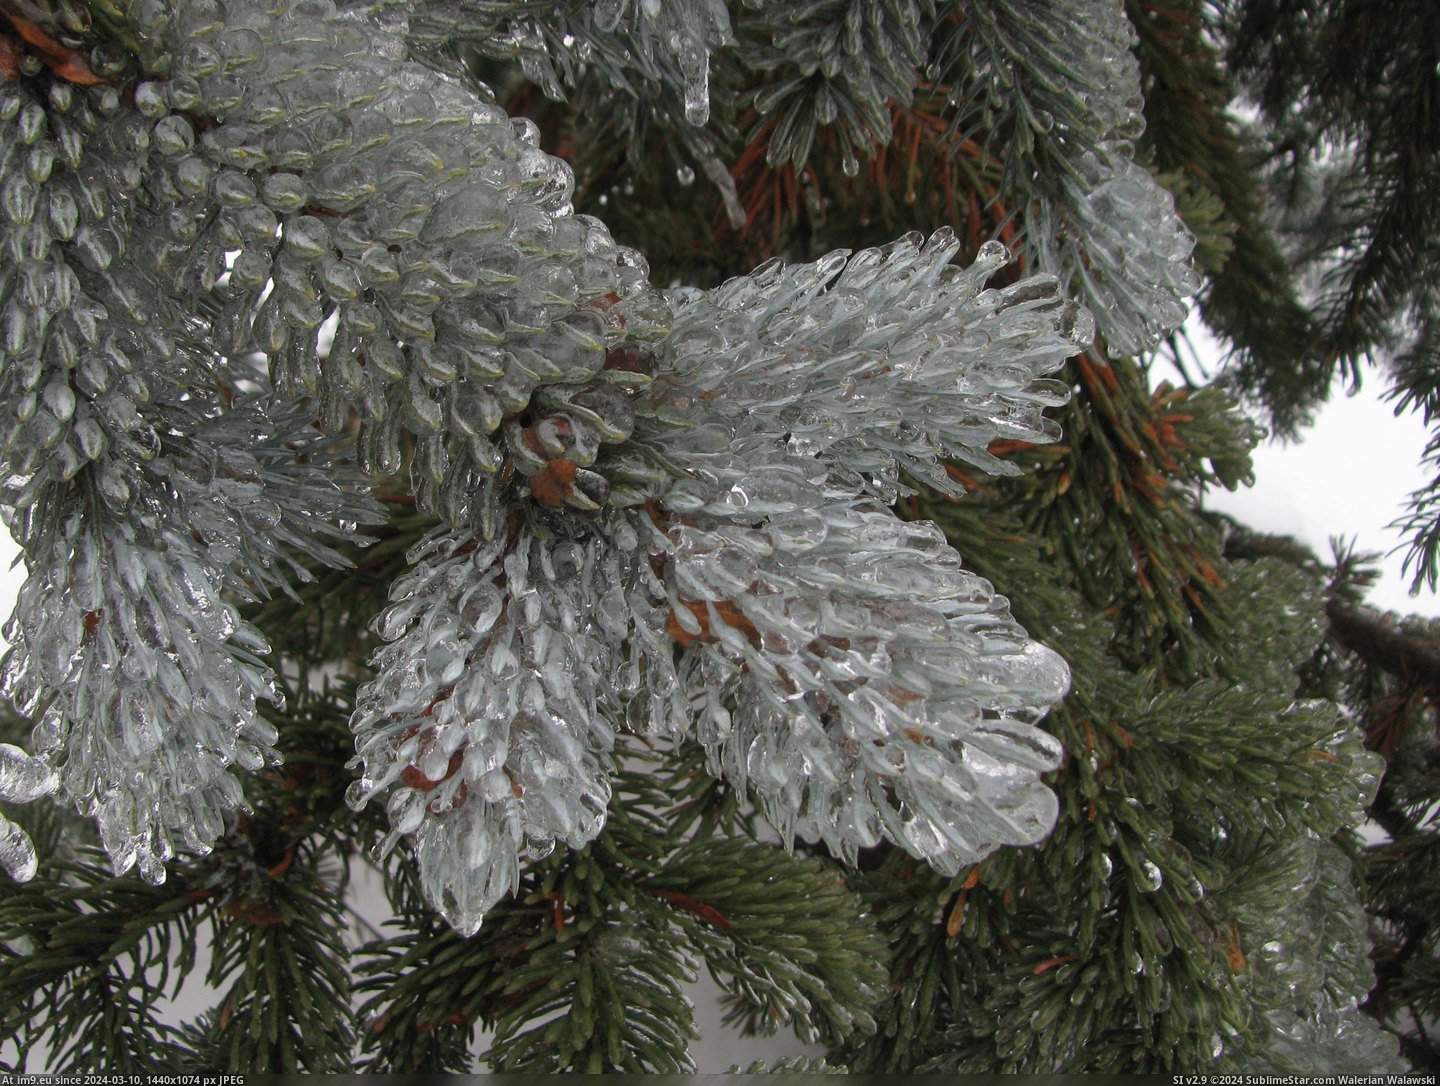 #Tree #Ice #Pine #Encased #Storm #Yard [Pics] The pine tree in my yard is encased in ice after a storm. Pic. (Изображение из альбом My r/PICS favs))